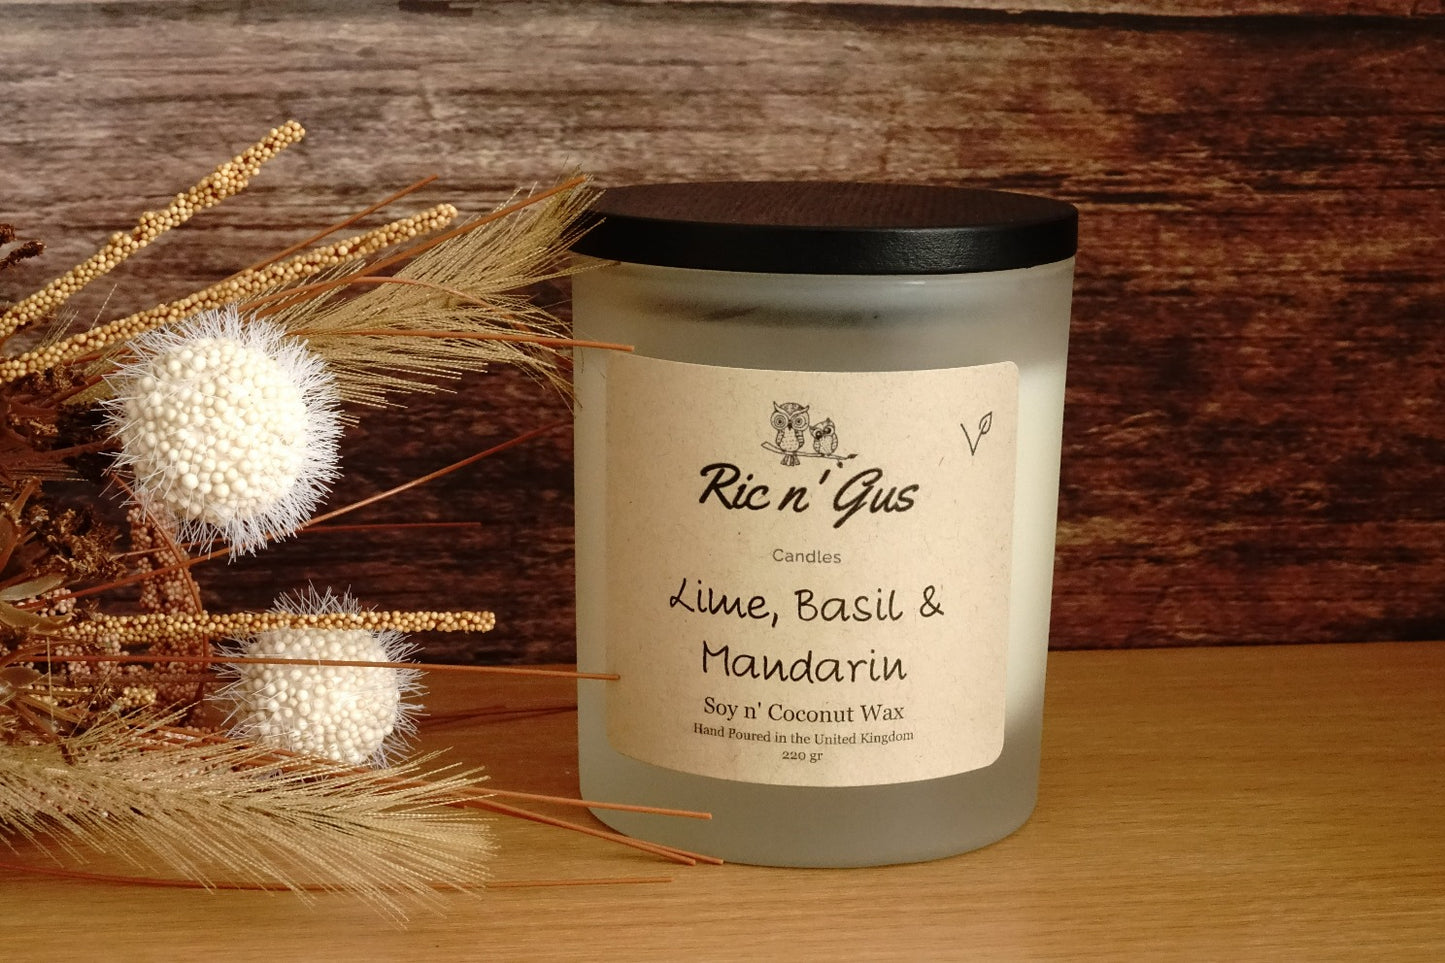 Lime Basil & Mandarin Candle - Soy & Coconut Wax Ric n'Gus Candles